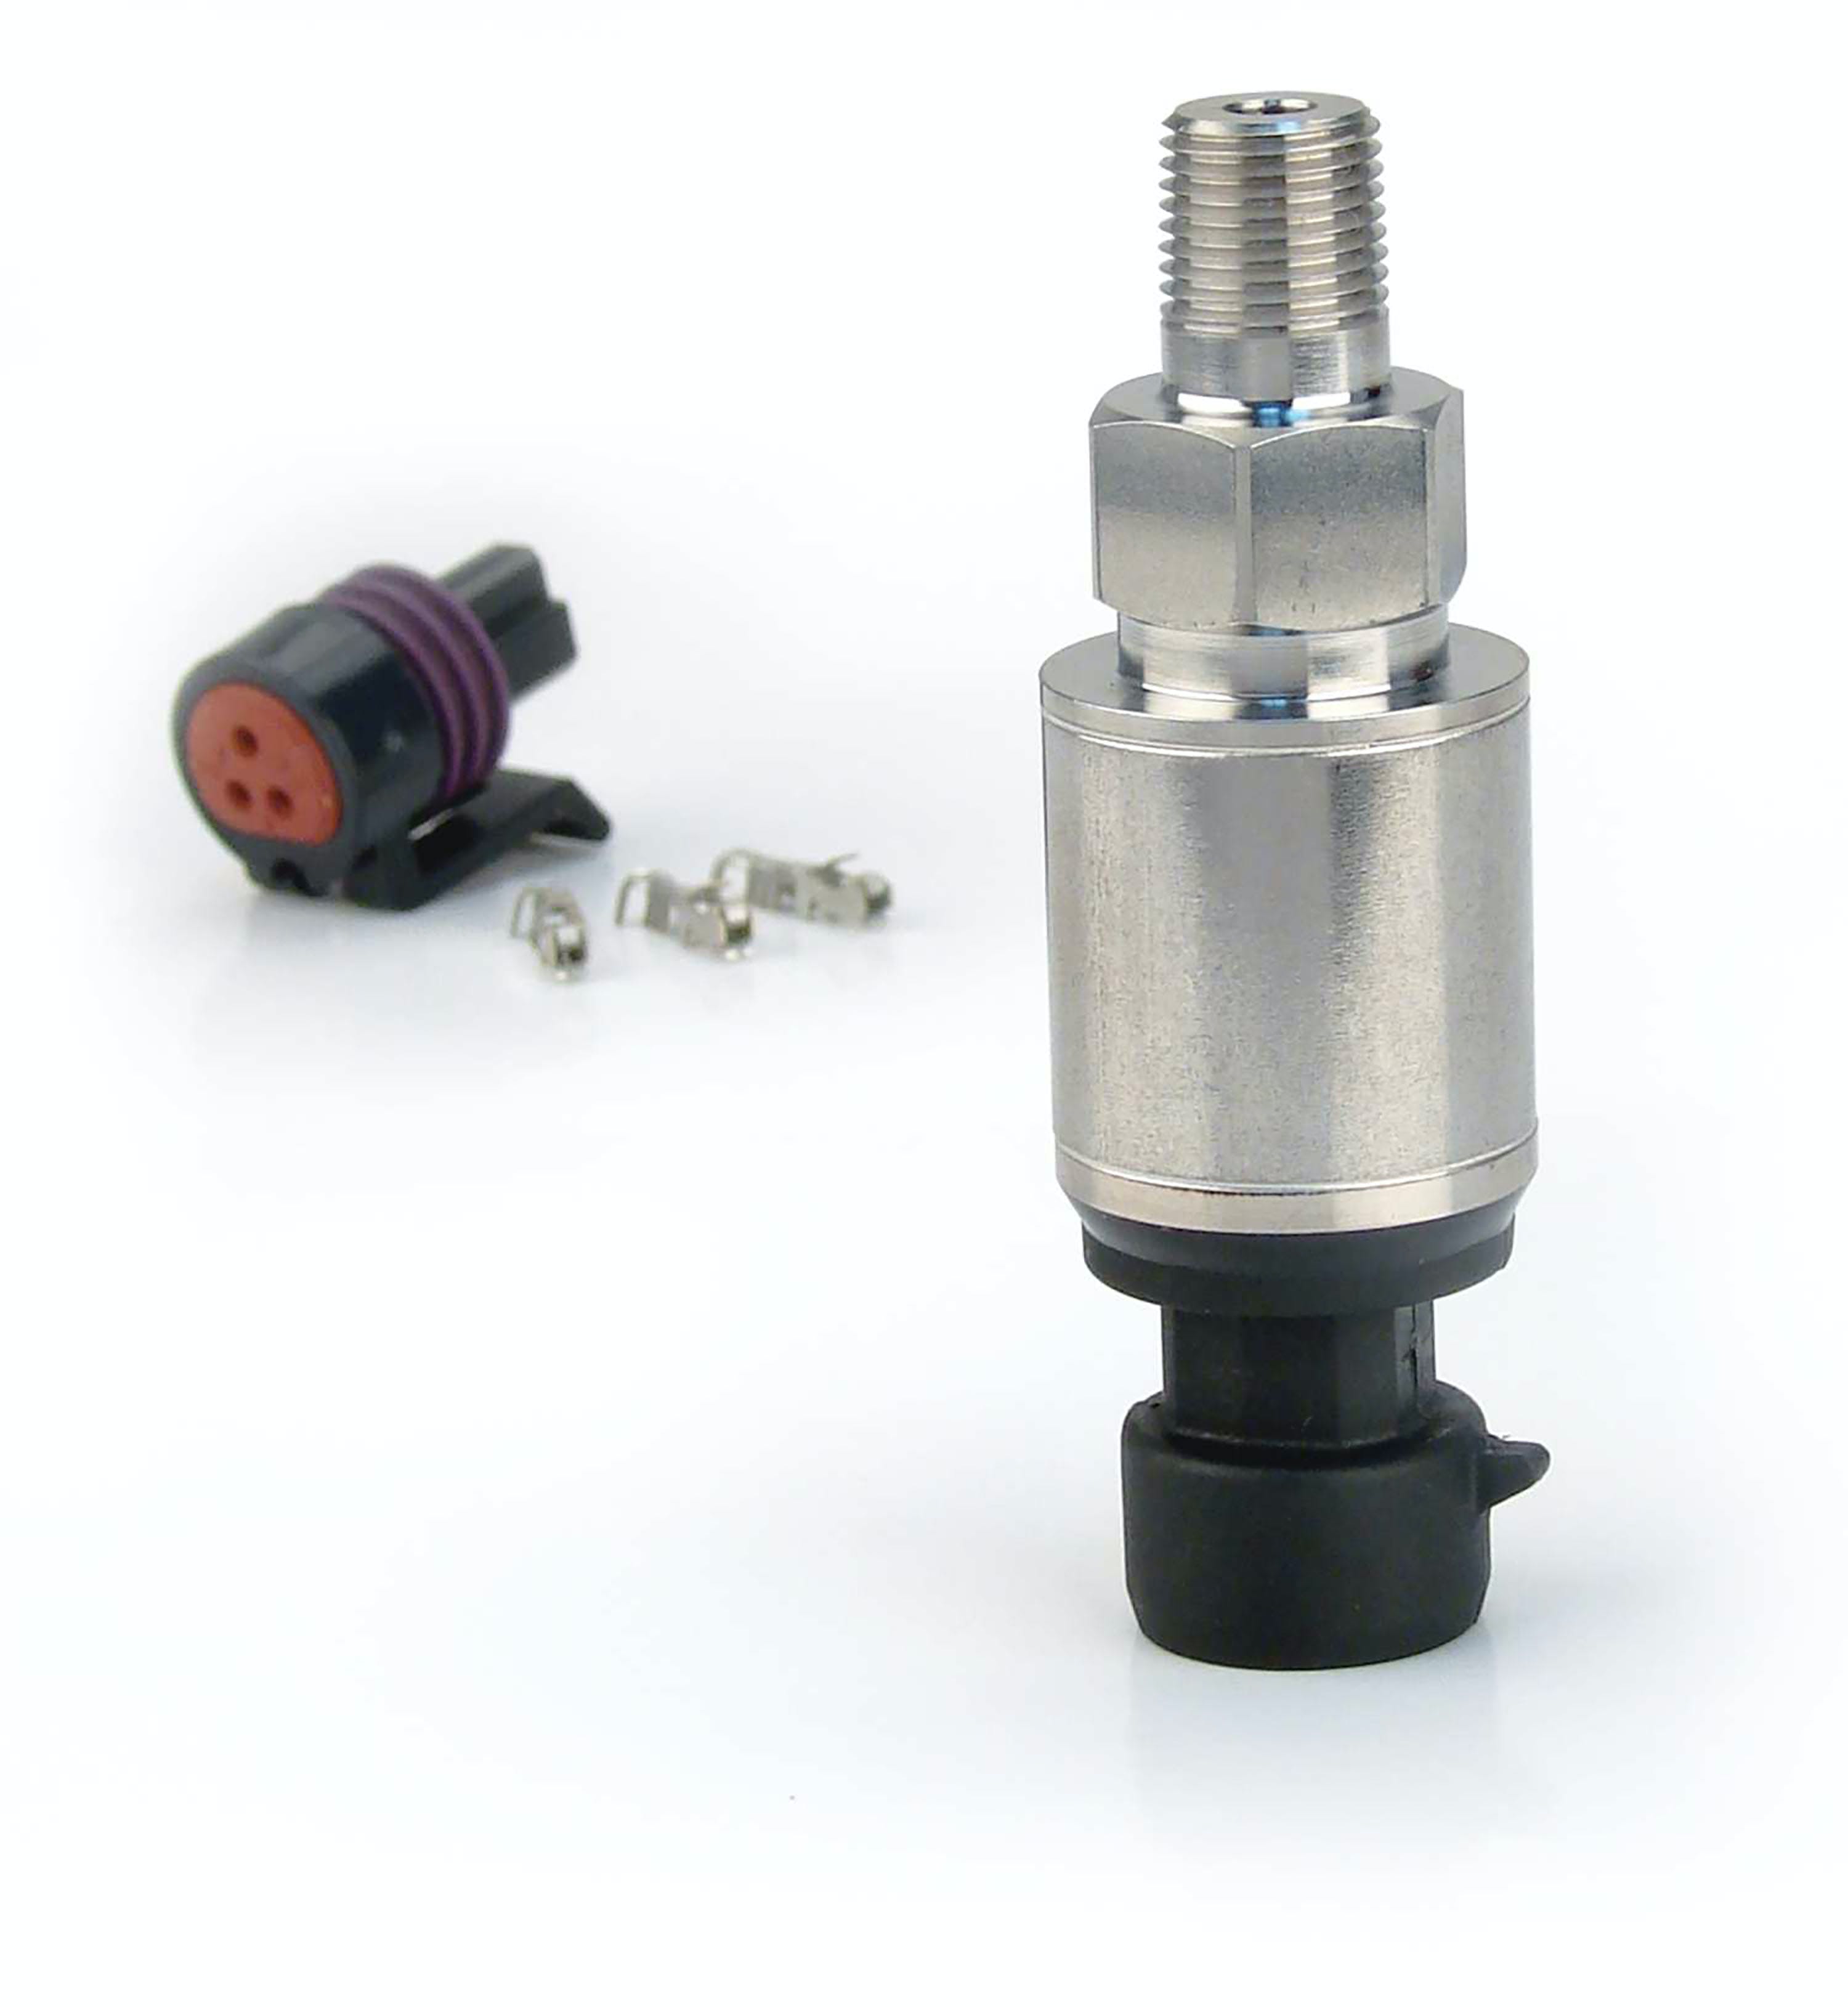 FAST - Fuel Air Spark Technology 307062 Single Pressure Sensor Kit 0 to 100 PSI